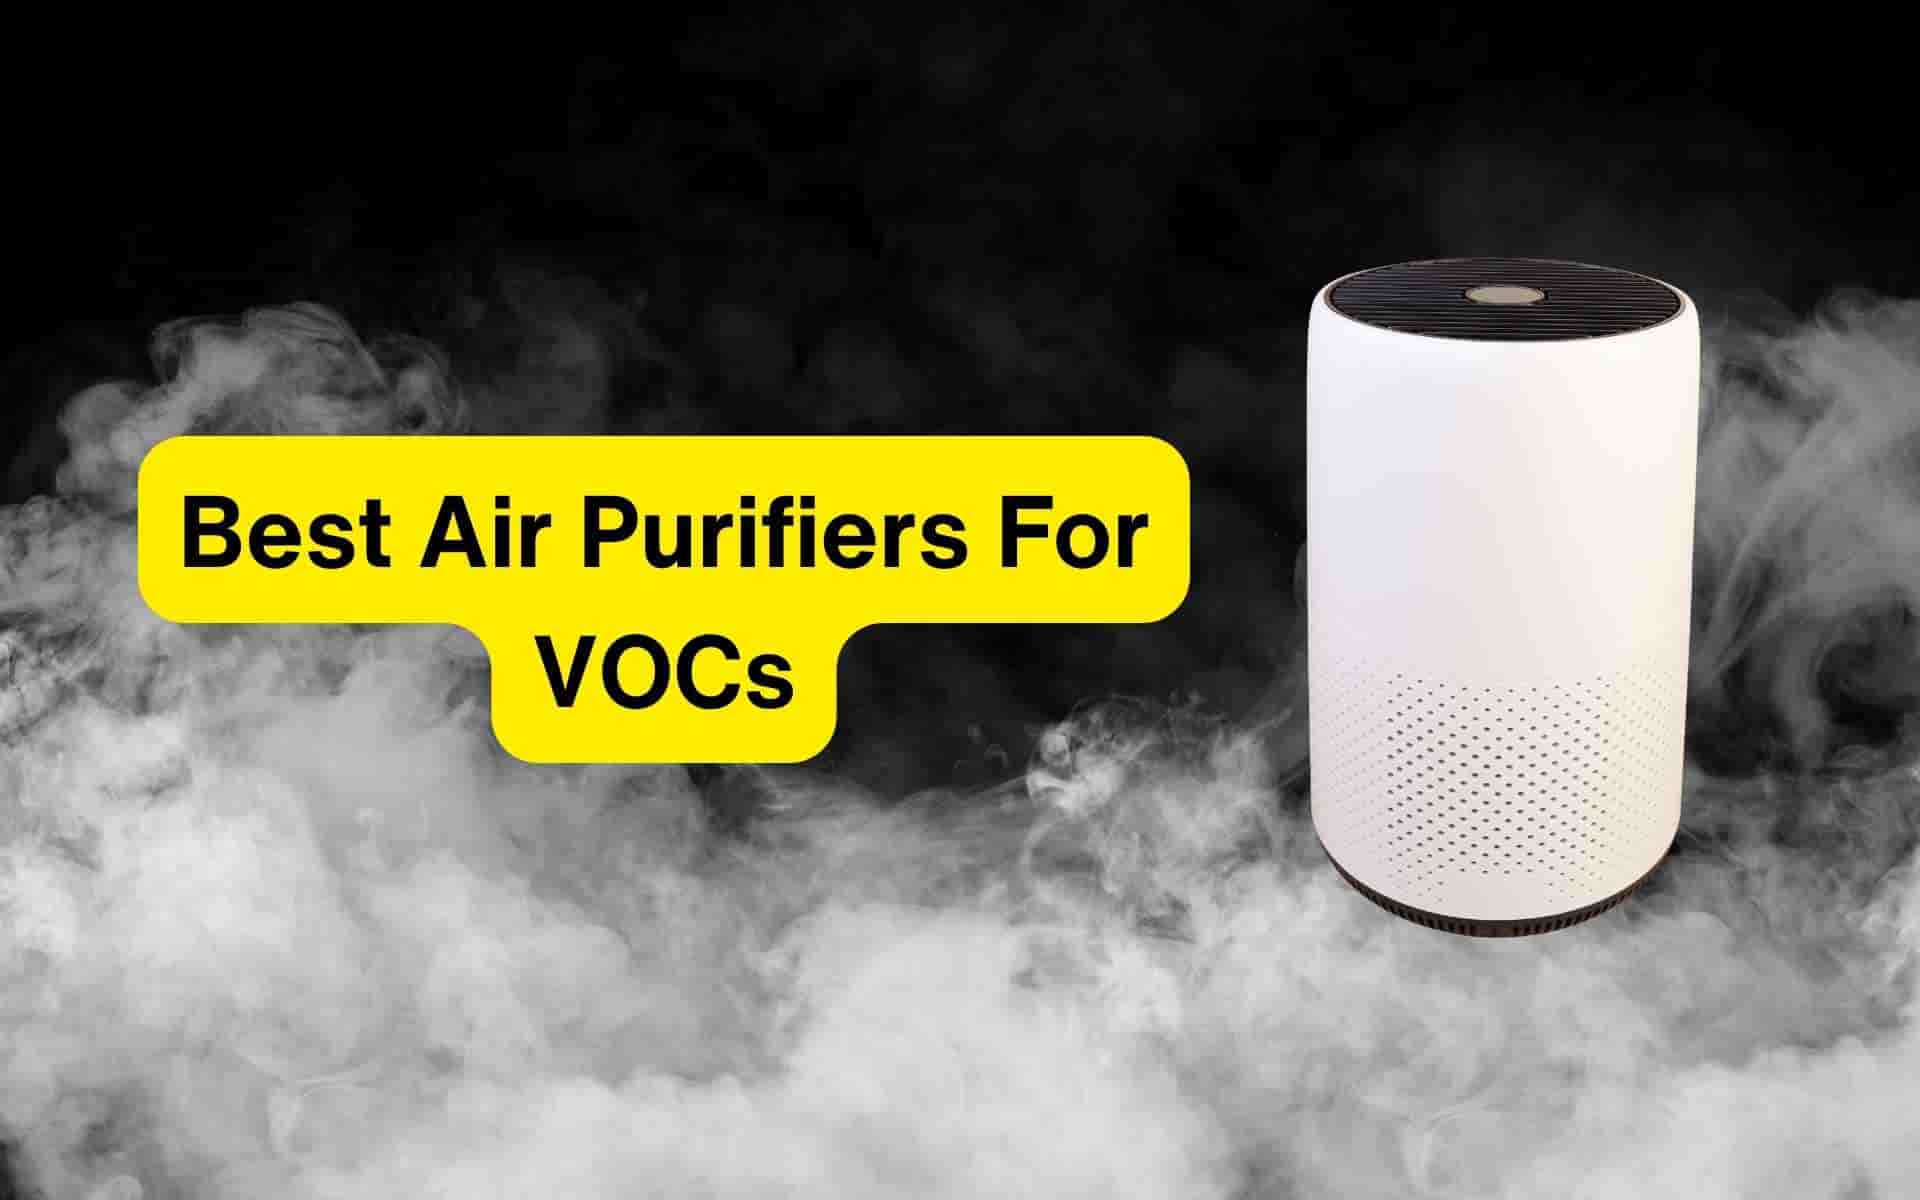 Best Air Purifiers For VOCs